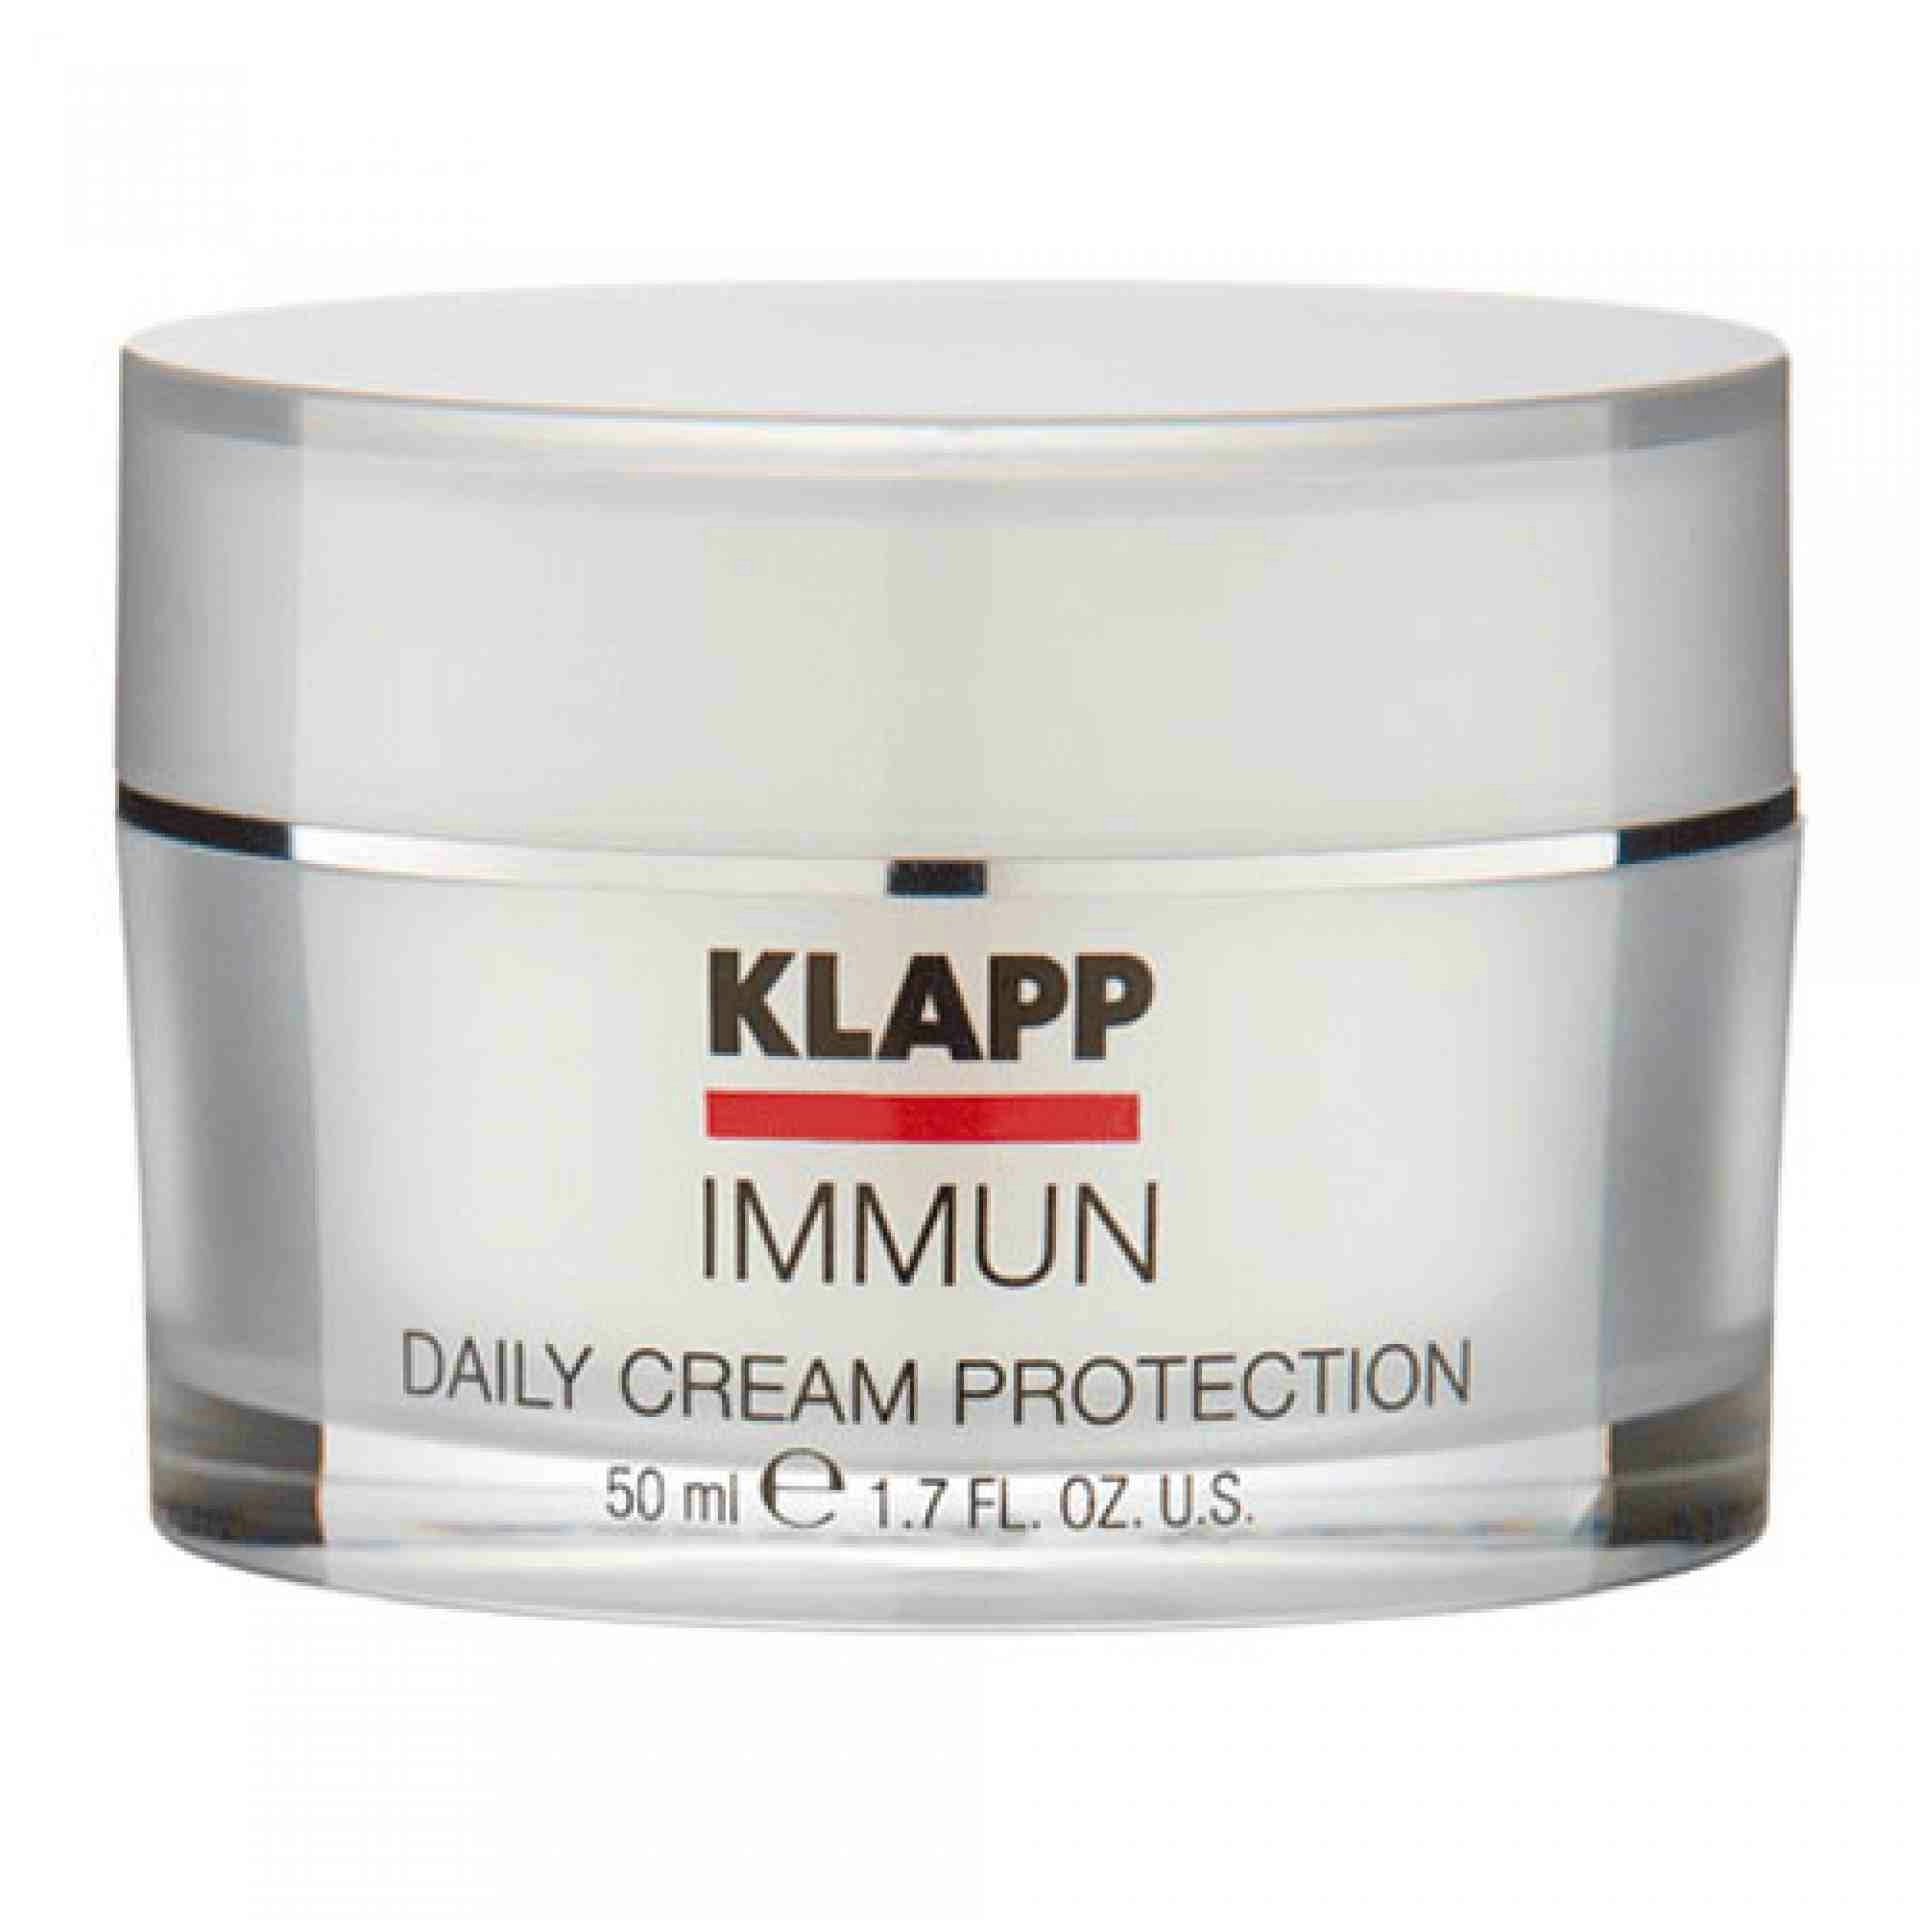 Daily Cream Protection | Crema Ligera Hidratante 50ml - Immun - Klapp ®